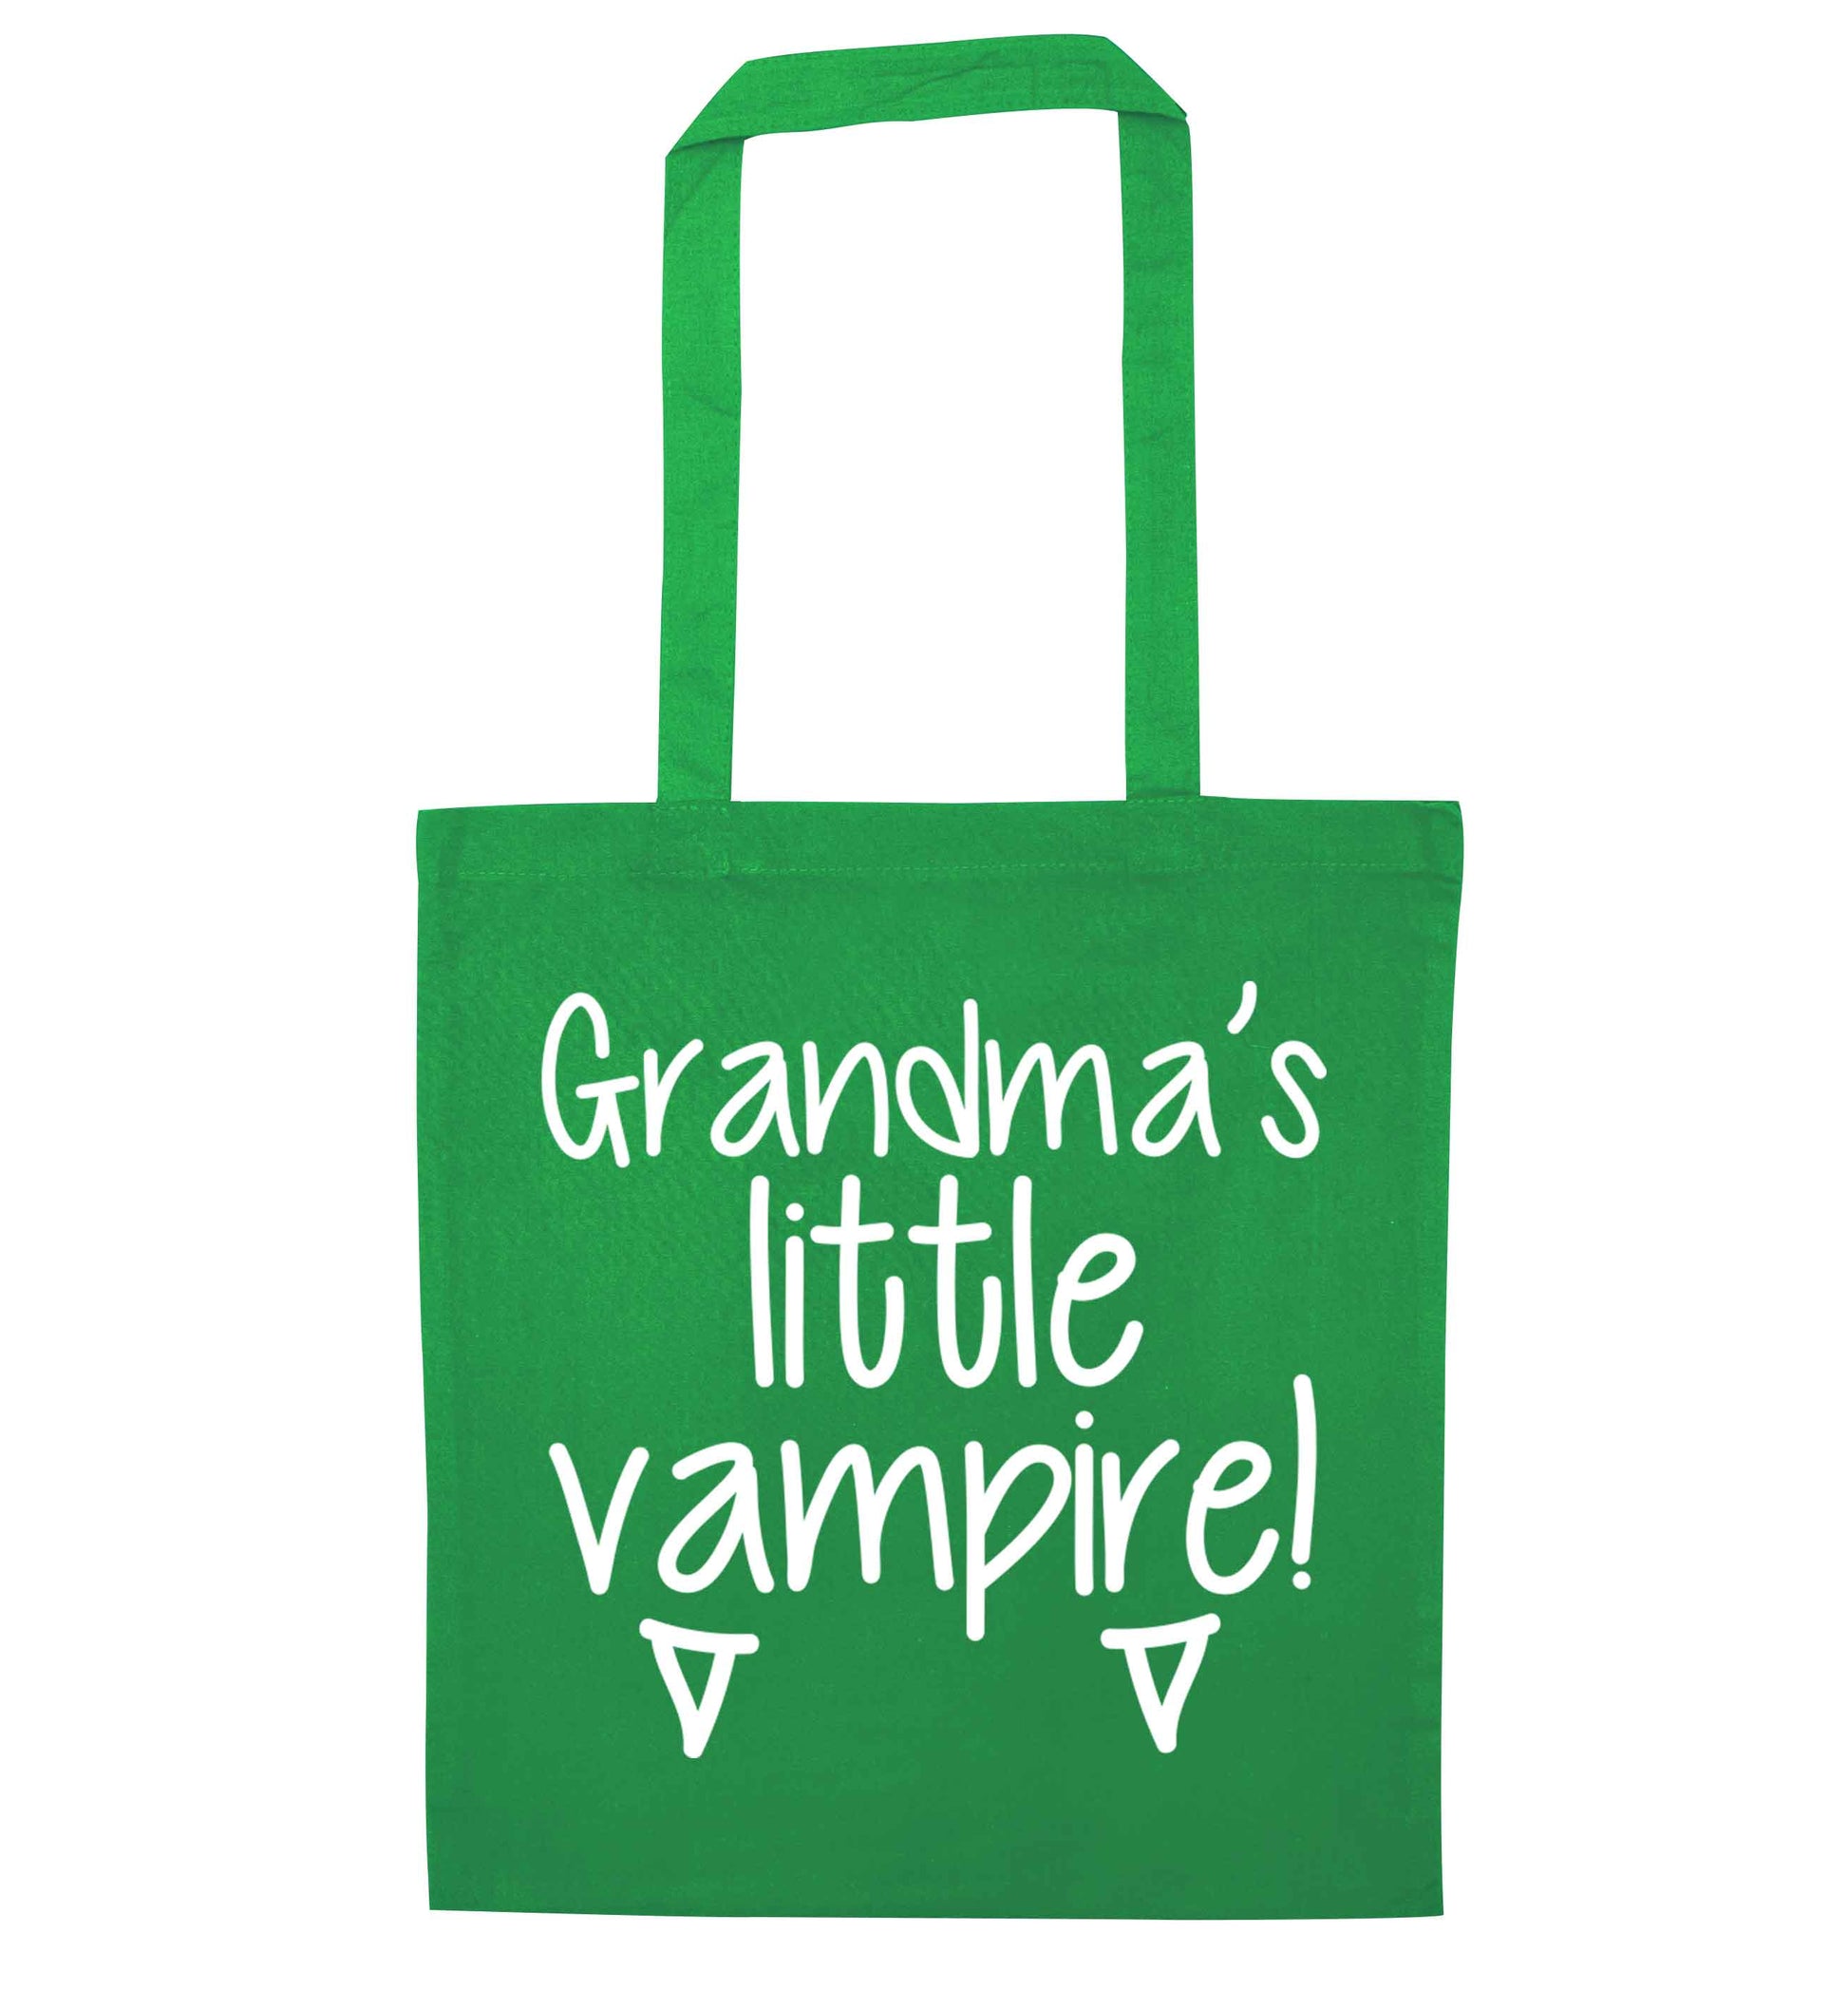 Grandma's little vampire green tote bag